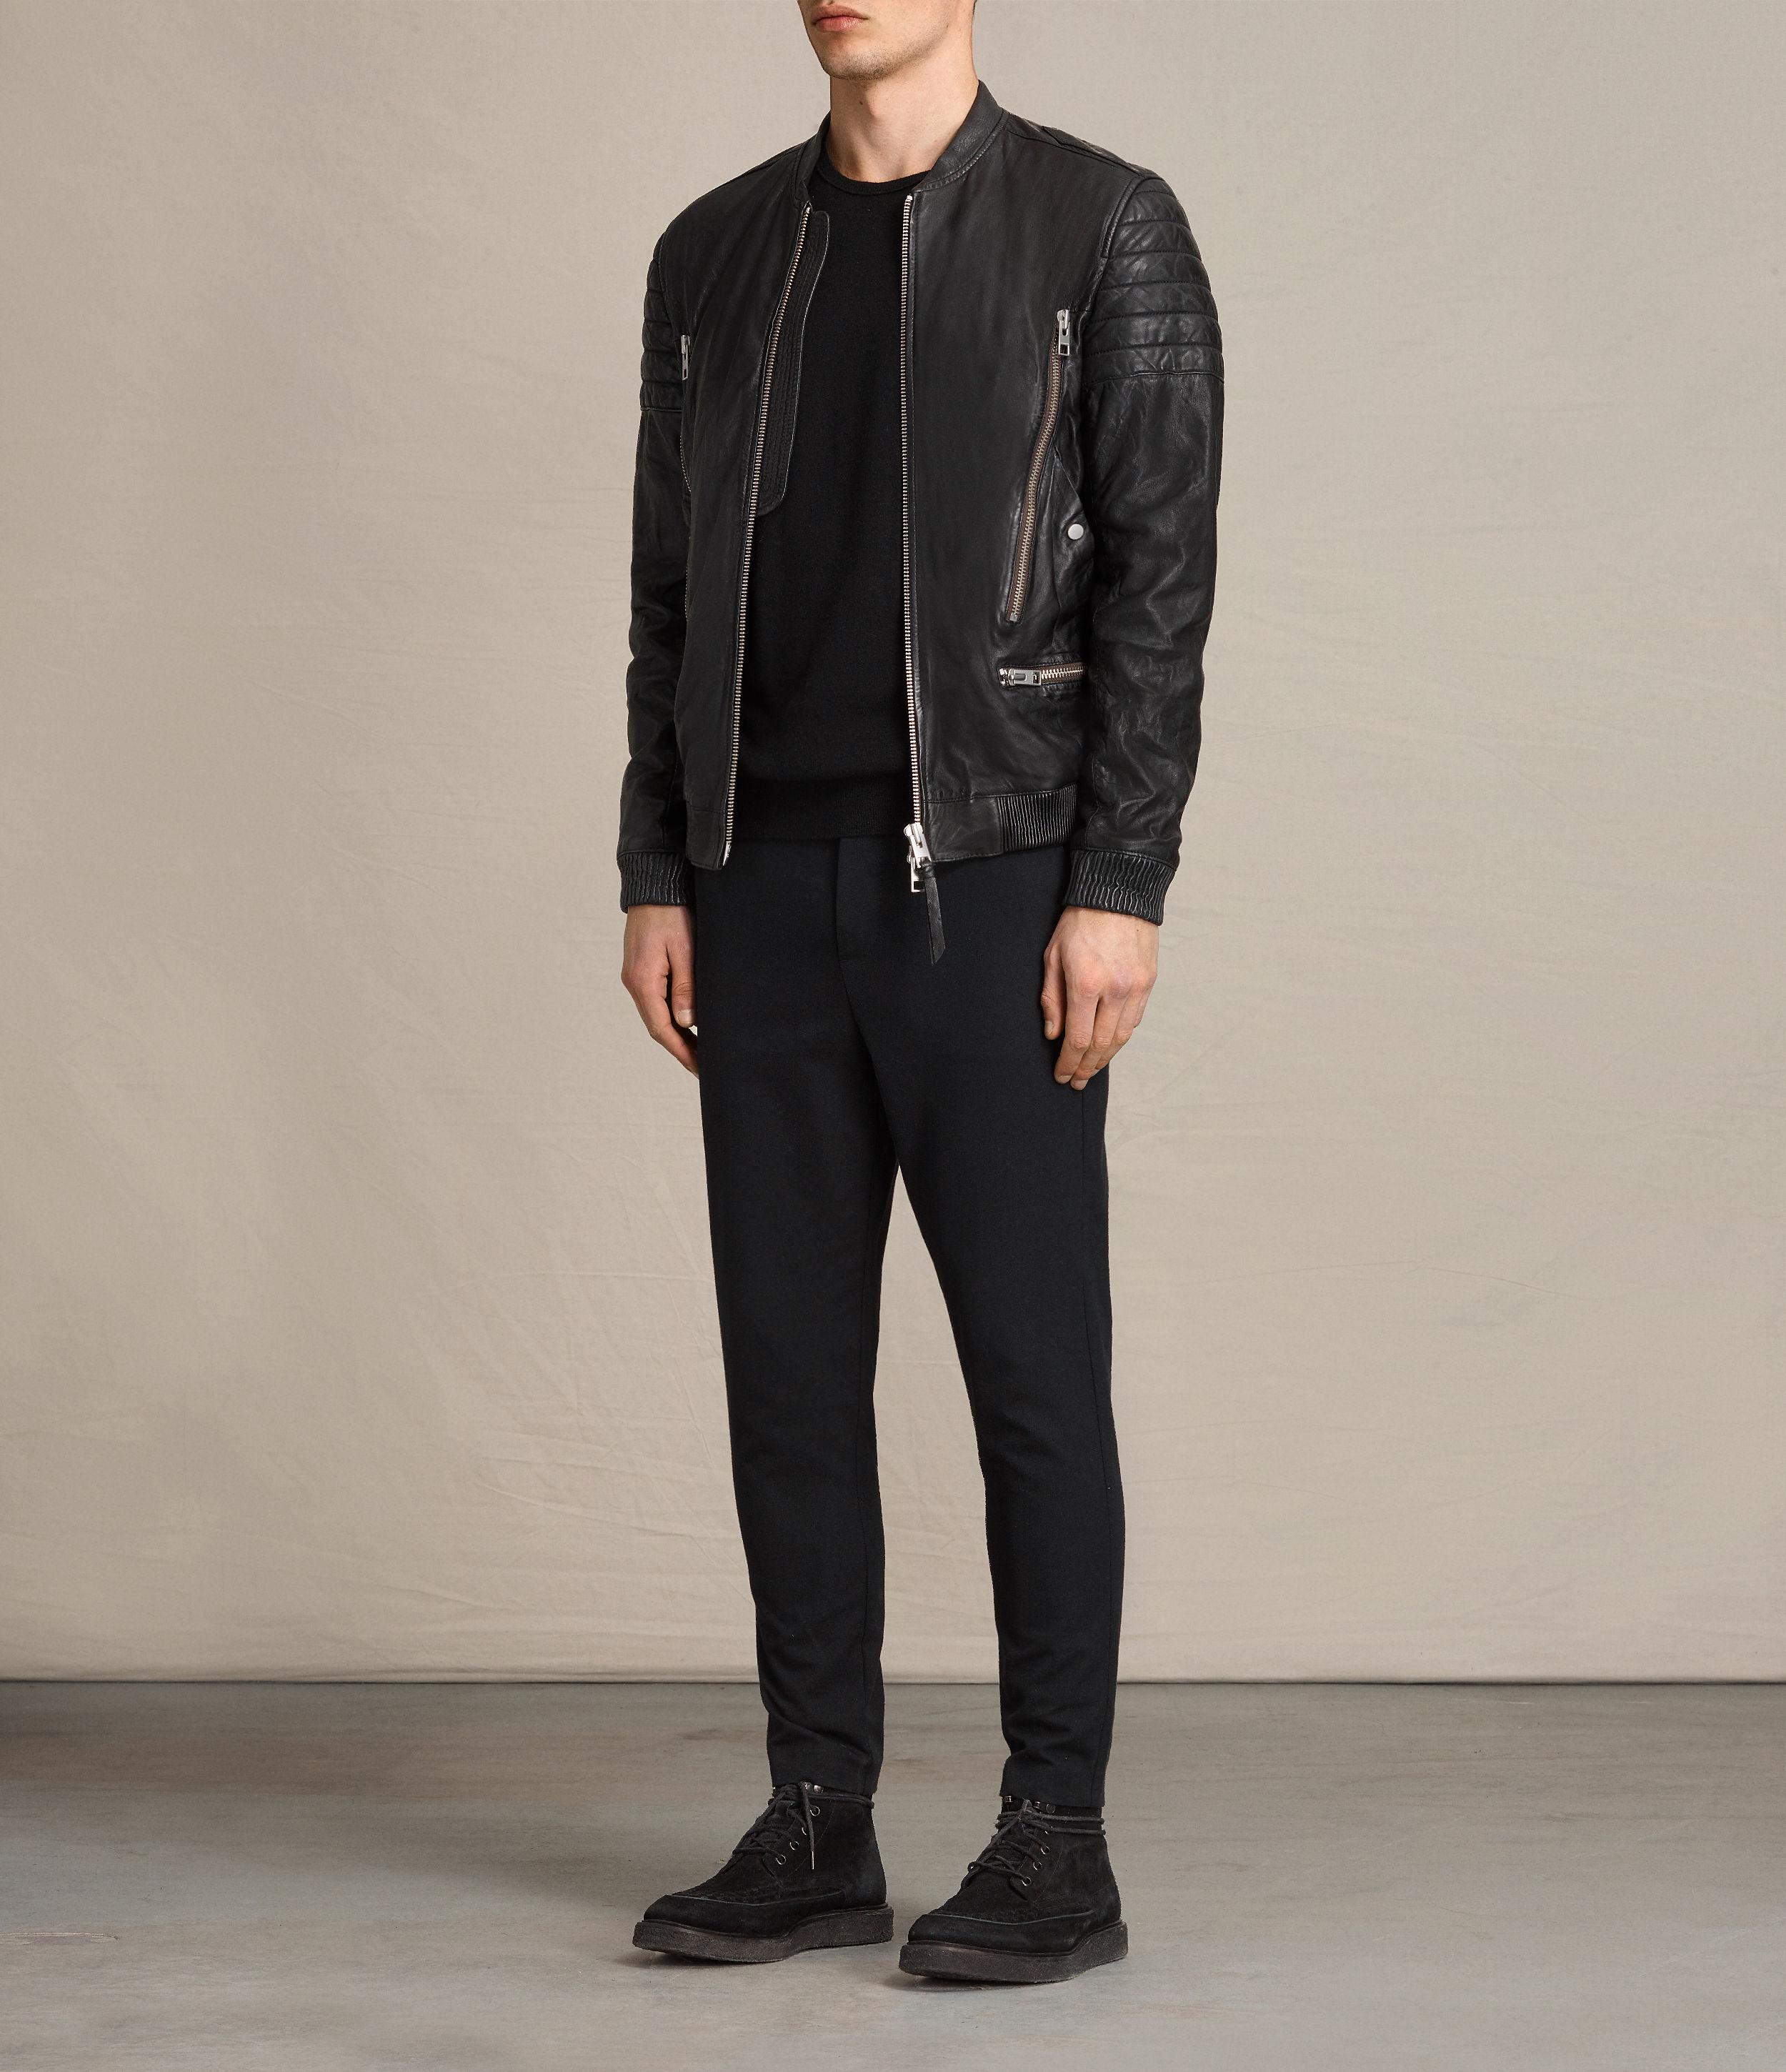 AllSaints Sanderson Leather Bomber Jacket in Black for Men - Lyst